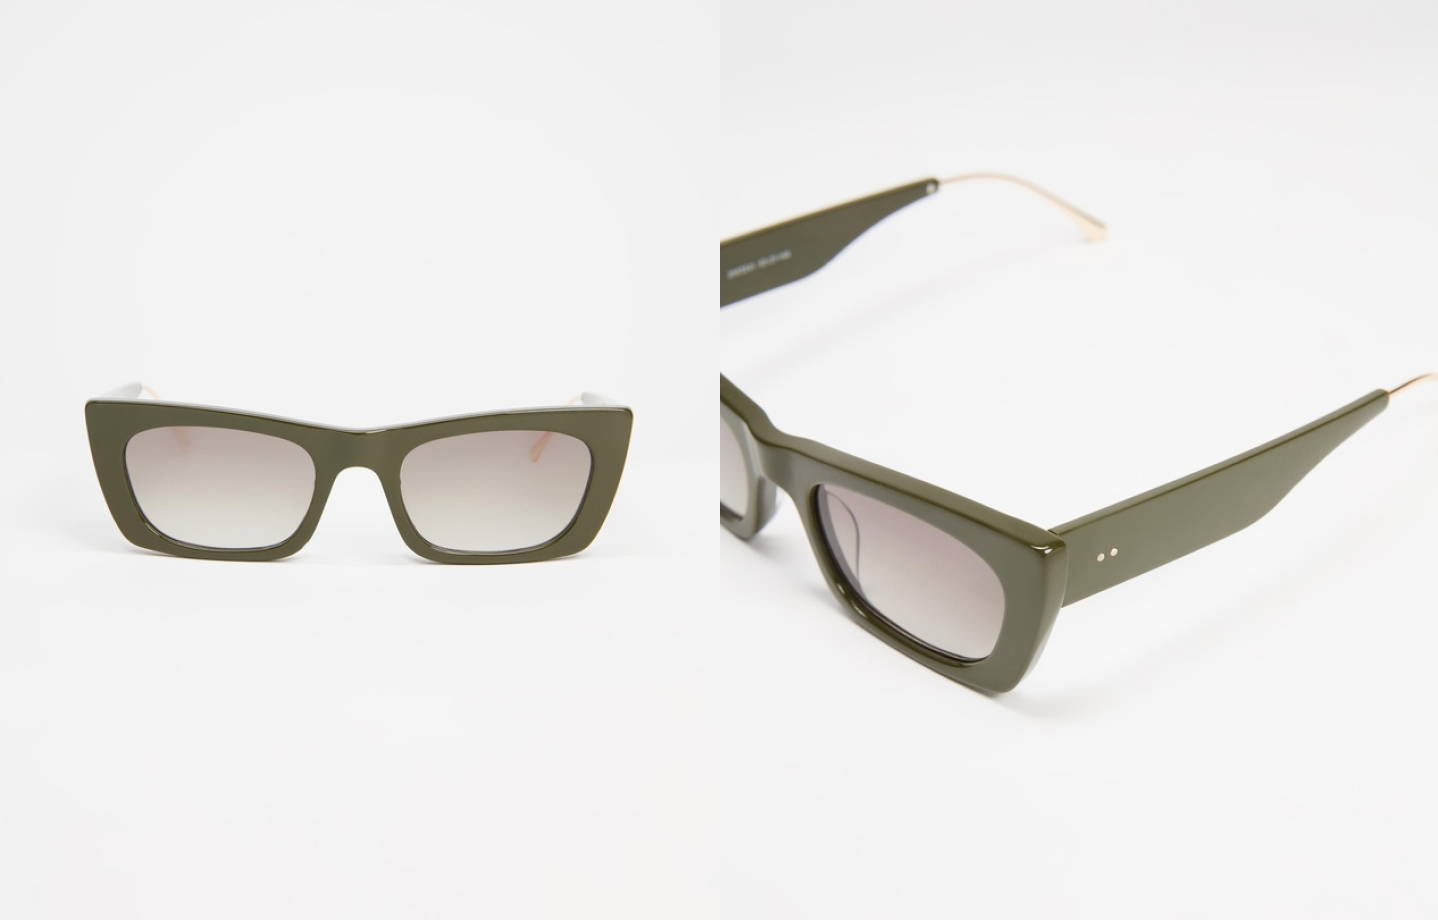 Oroton sunglasses for square face shapes 